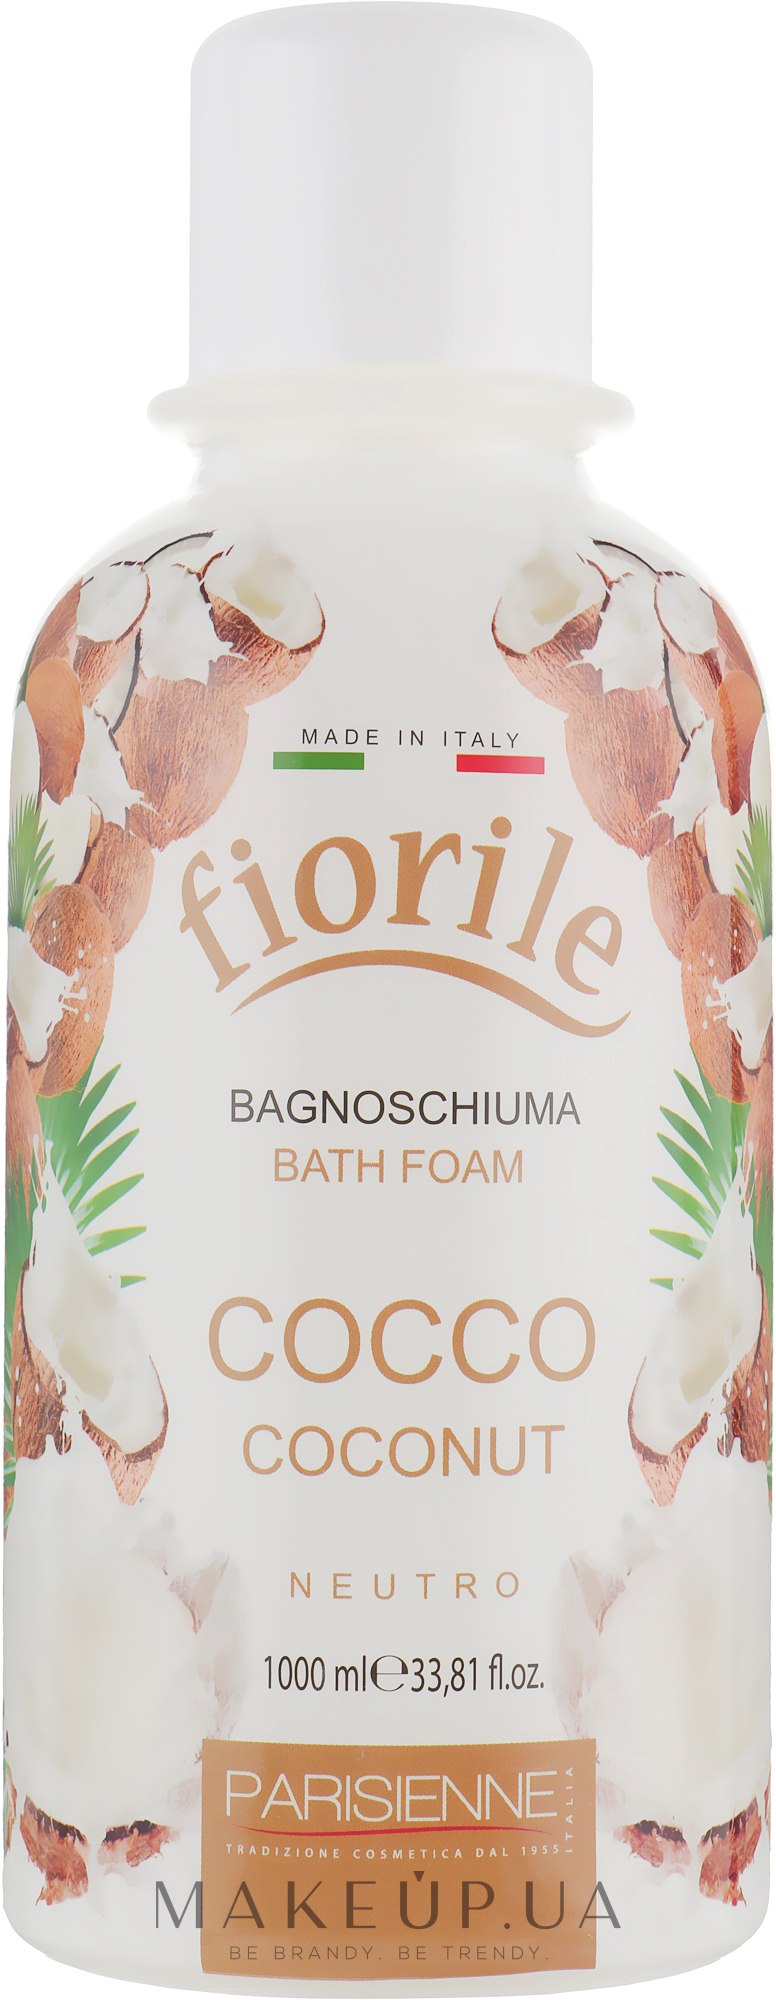 Піна для ванни "Кокос" - Parisienne Italia Fiorile Coconut Bath Foam — фото 1000ml